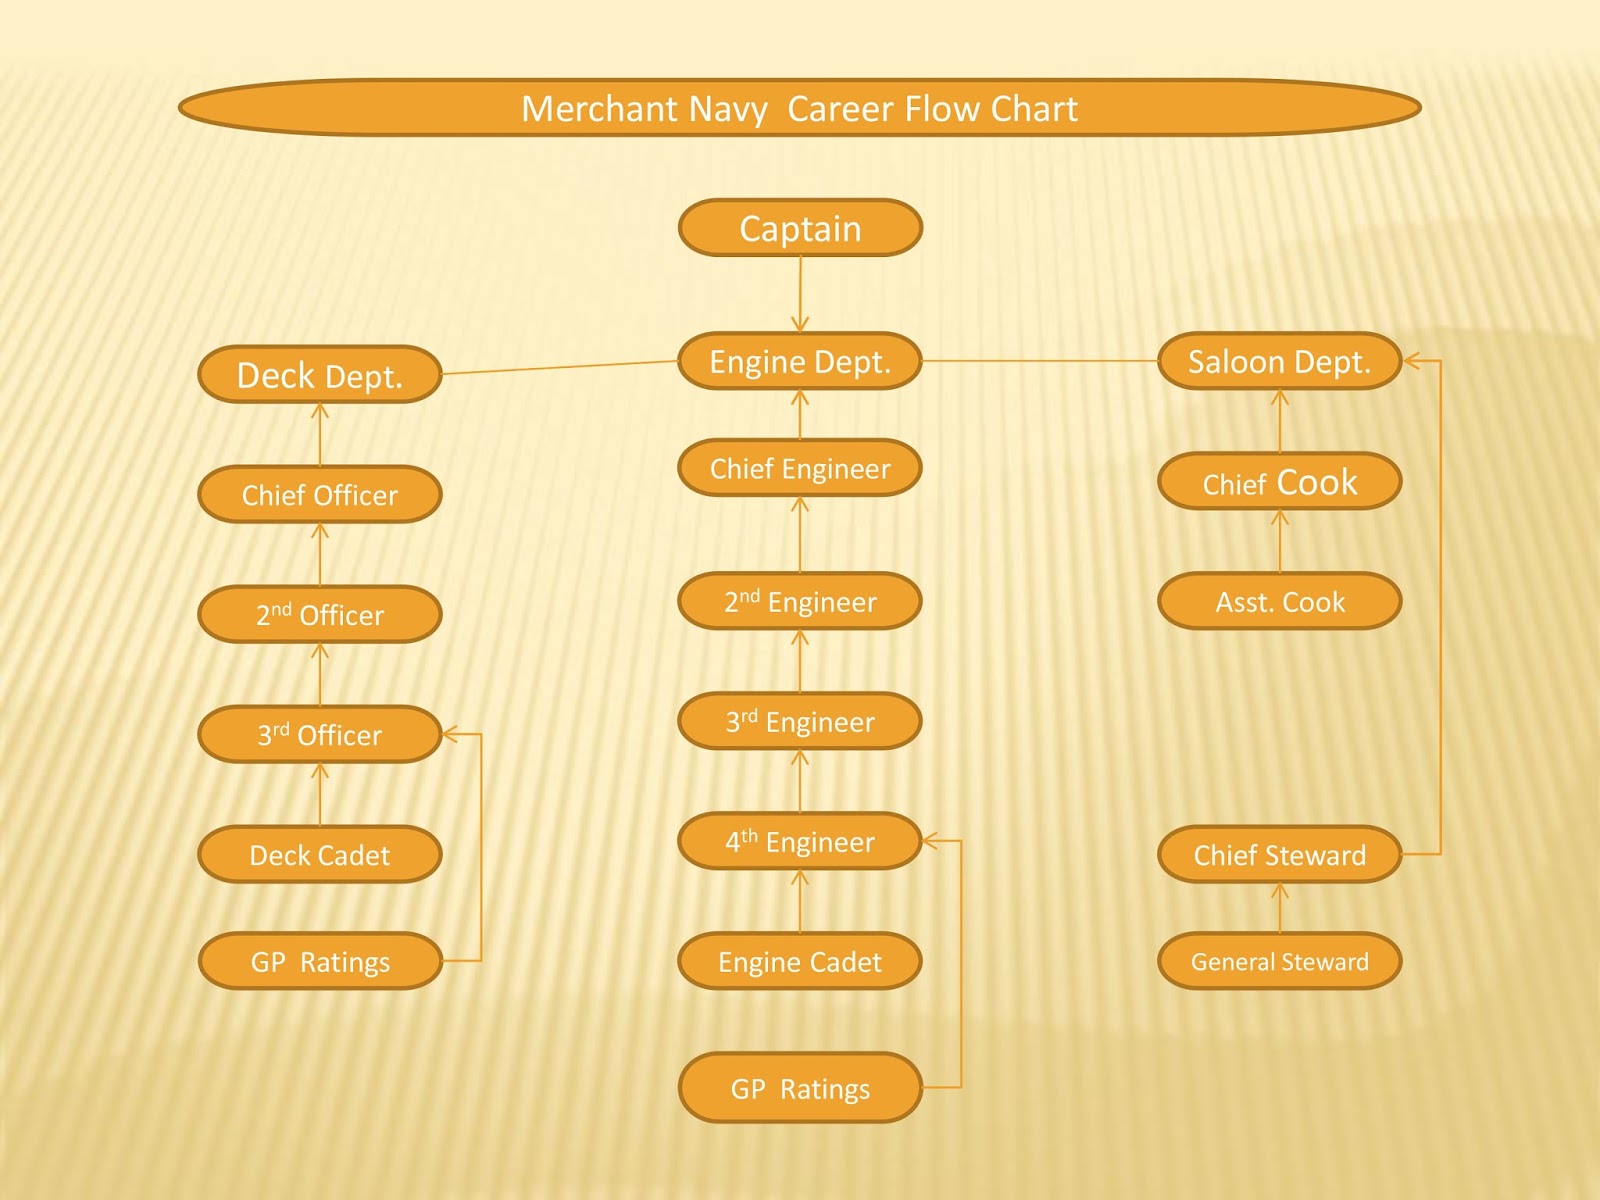 Gp Rating Career Flow Chart